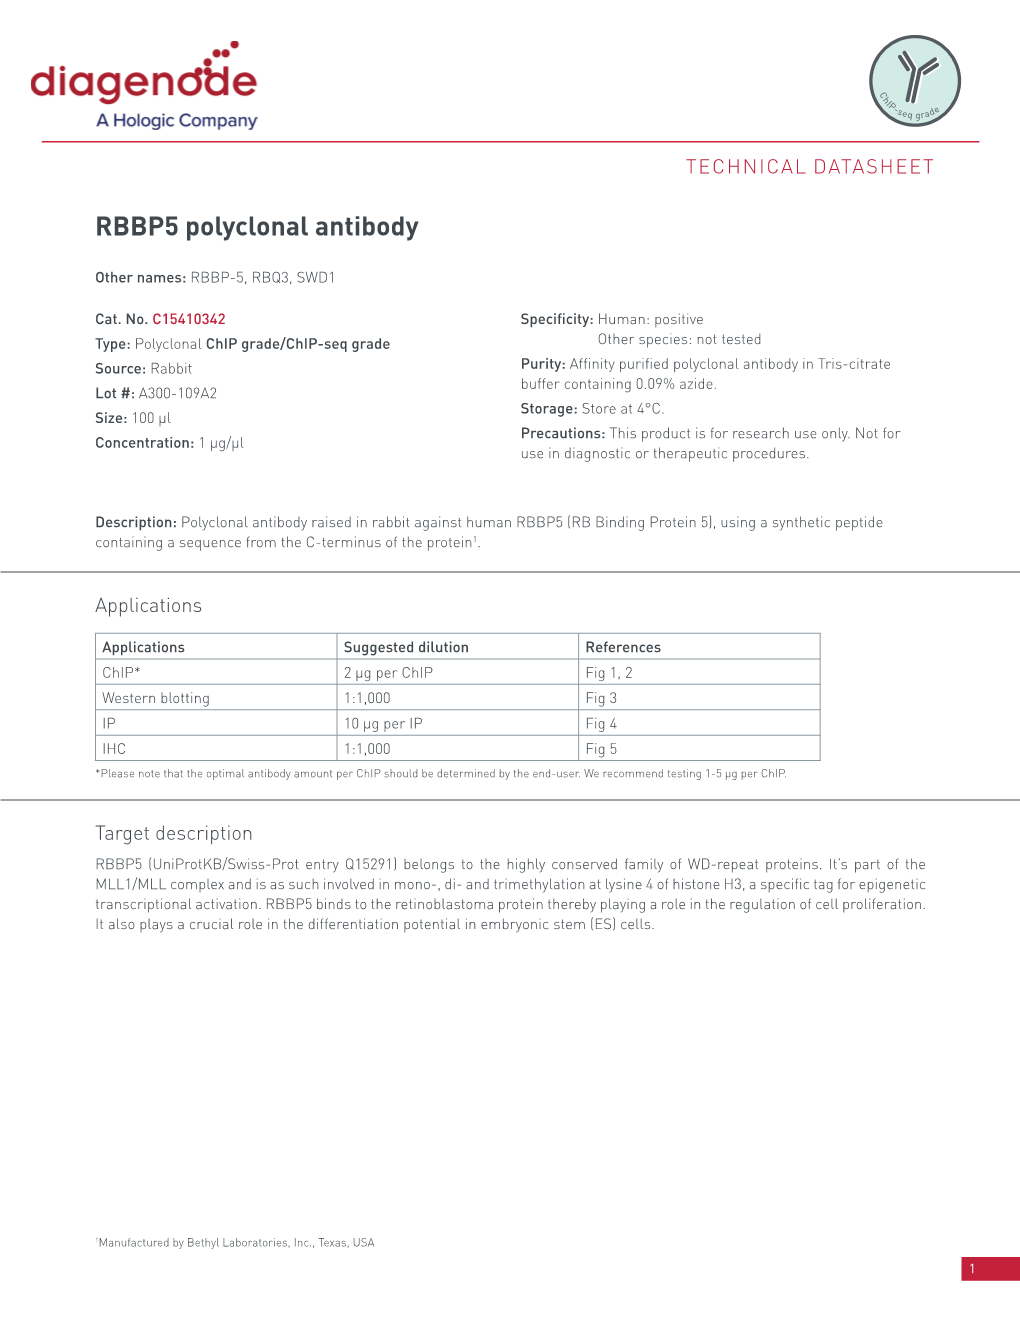 RBBP5 Polyclonal Antibody